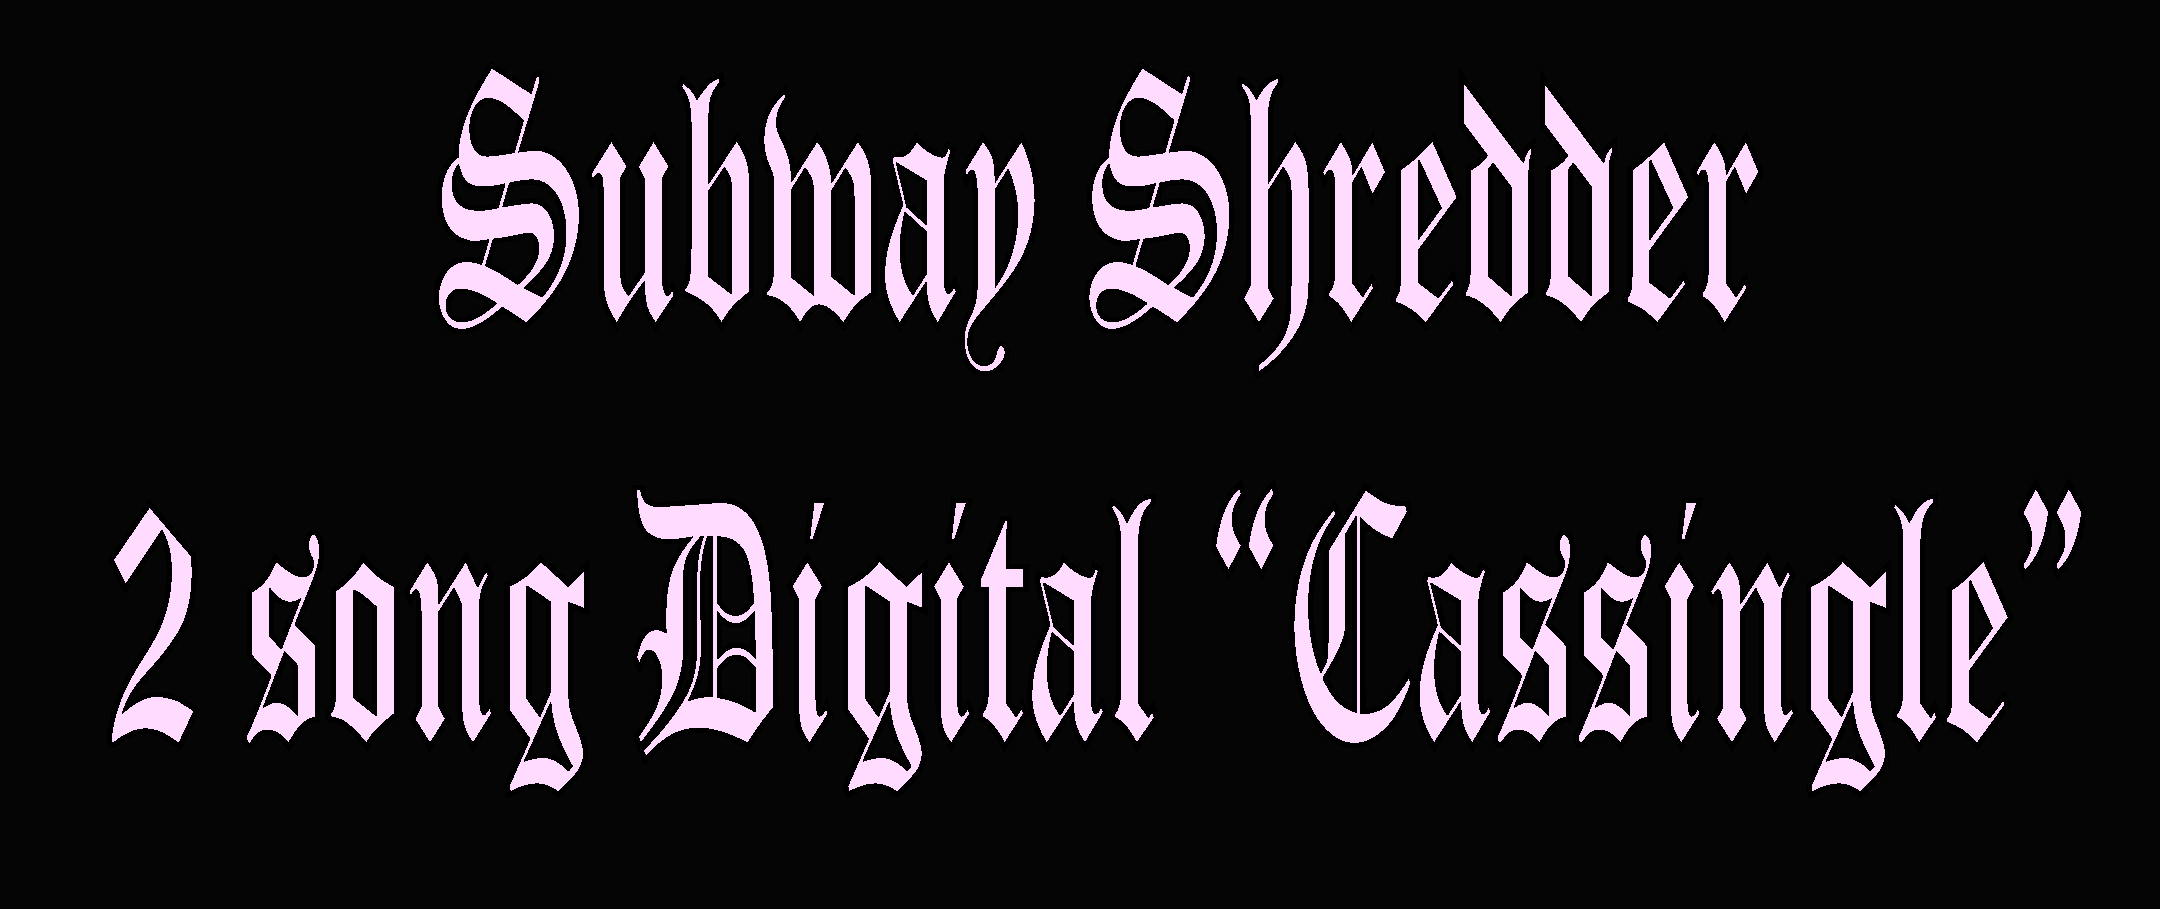 Subway Shredder 2 Song Digital Cassingle Royalty Free Gothic Horror Tracks Dungeon Synth